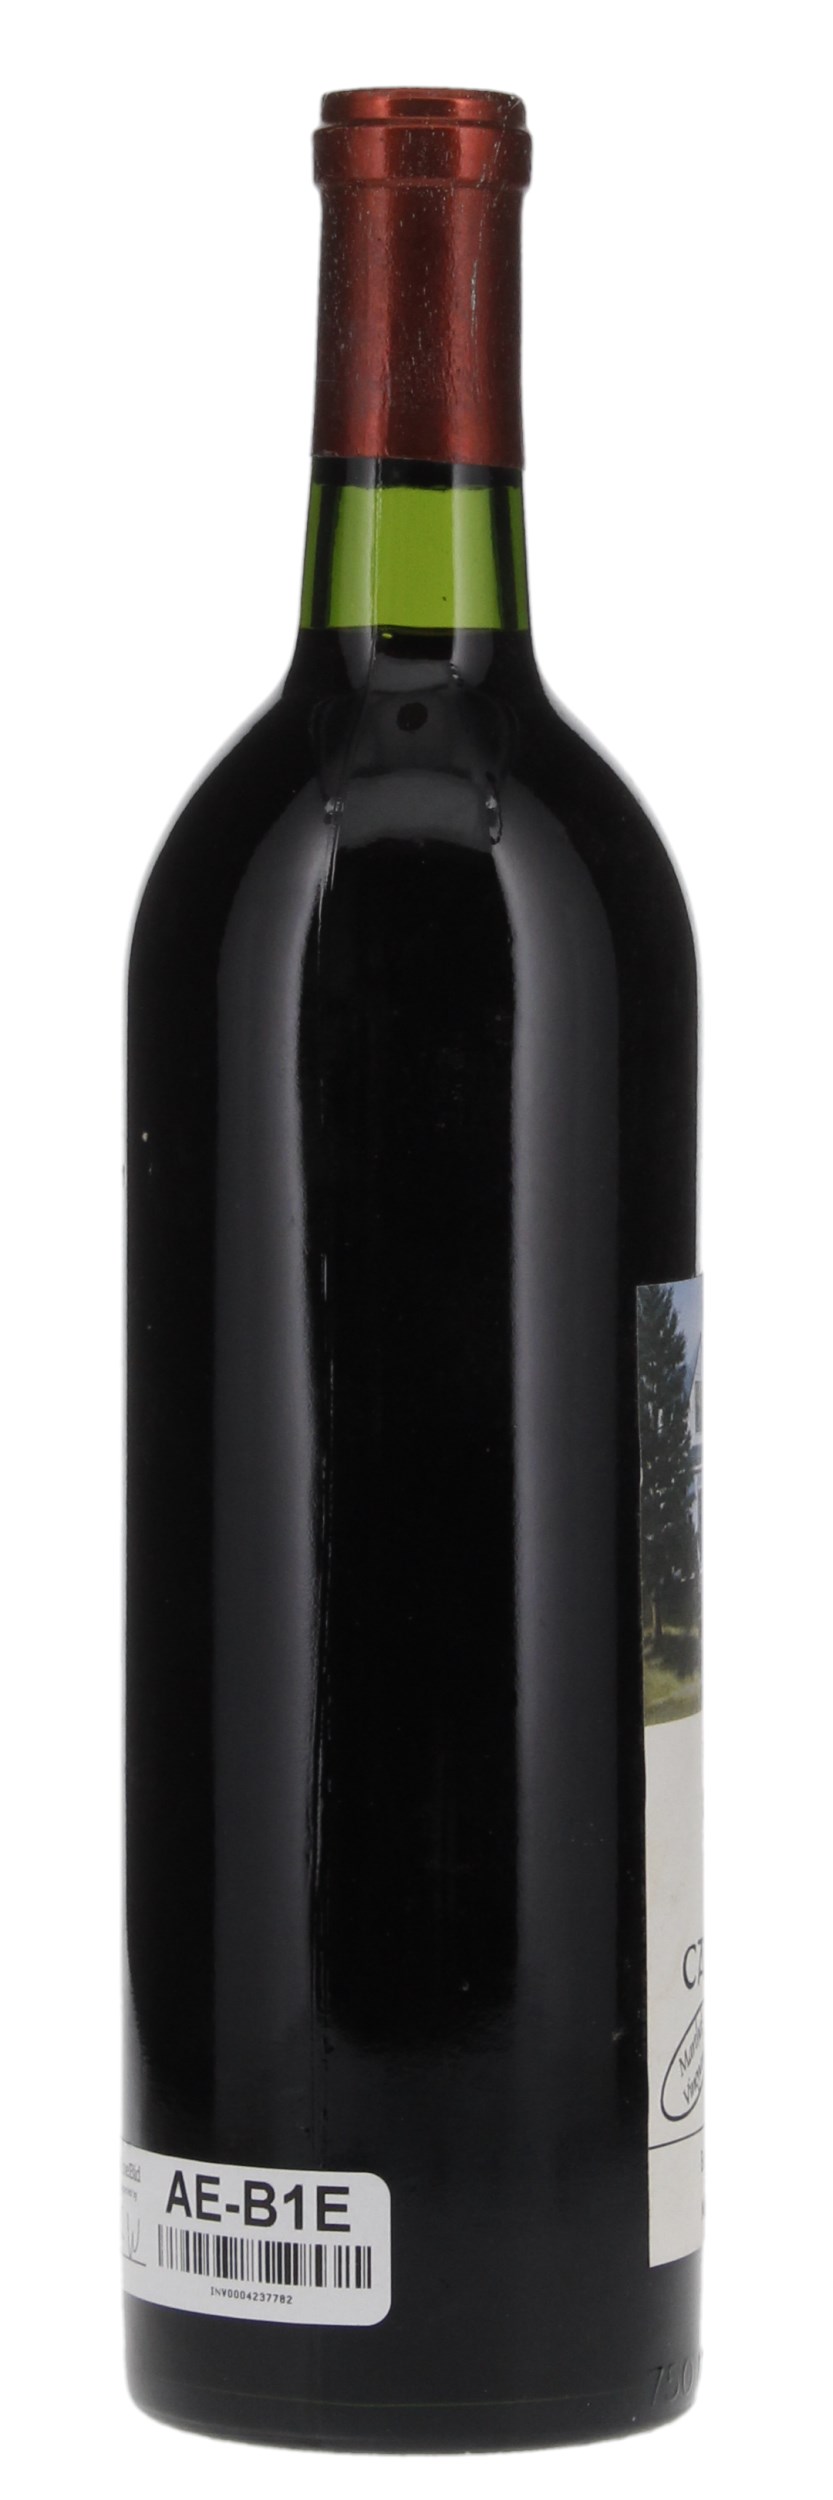 1985 Heitz Martha's Vineyard Cabernet Sauvignon, 750ml